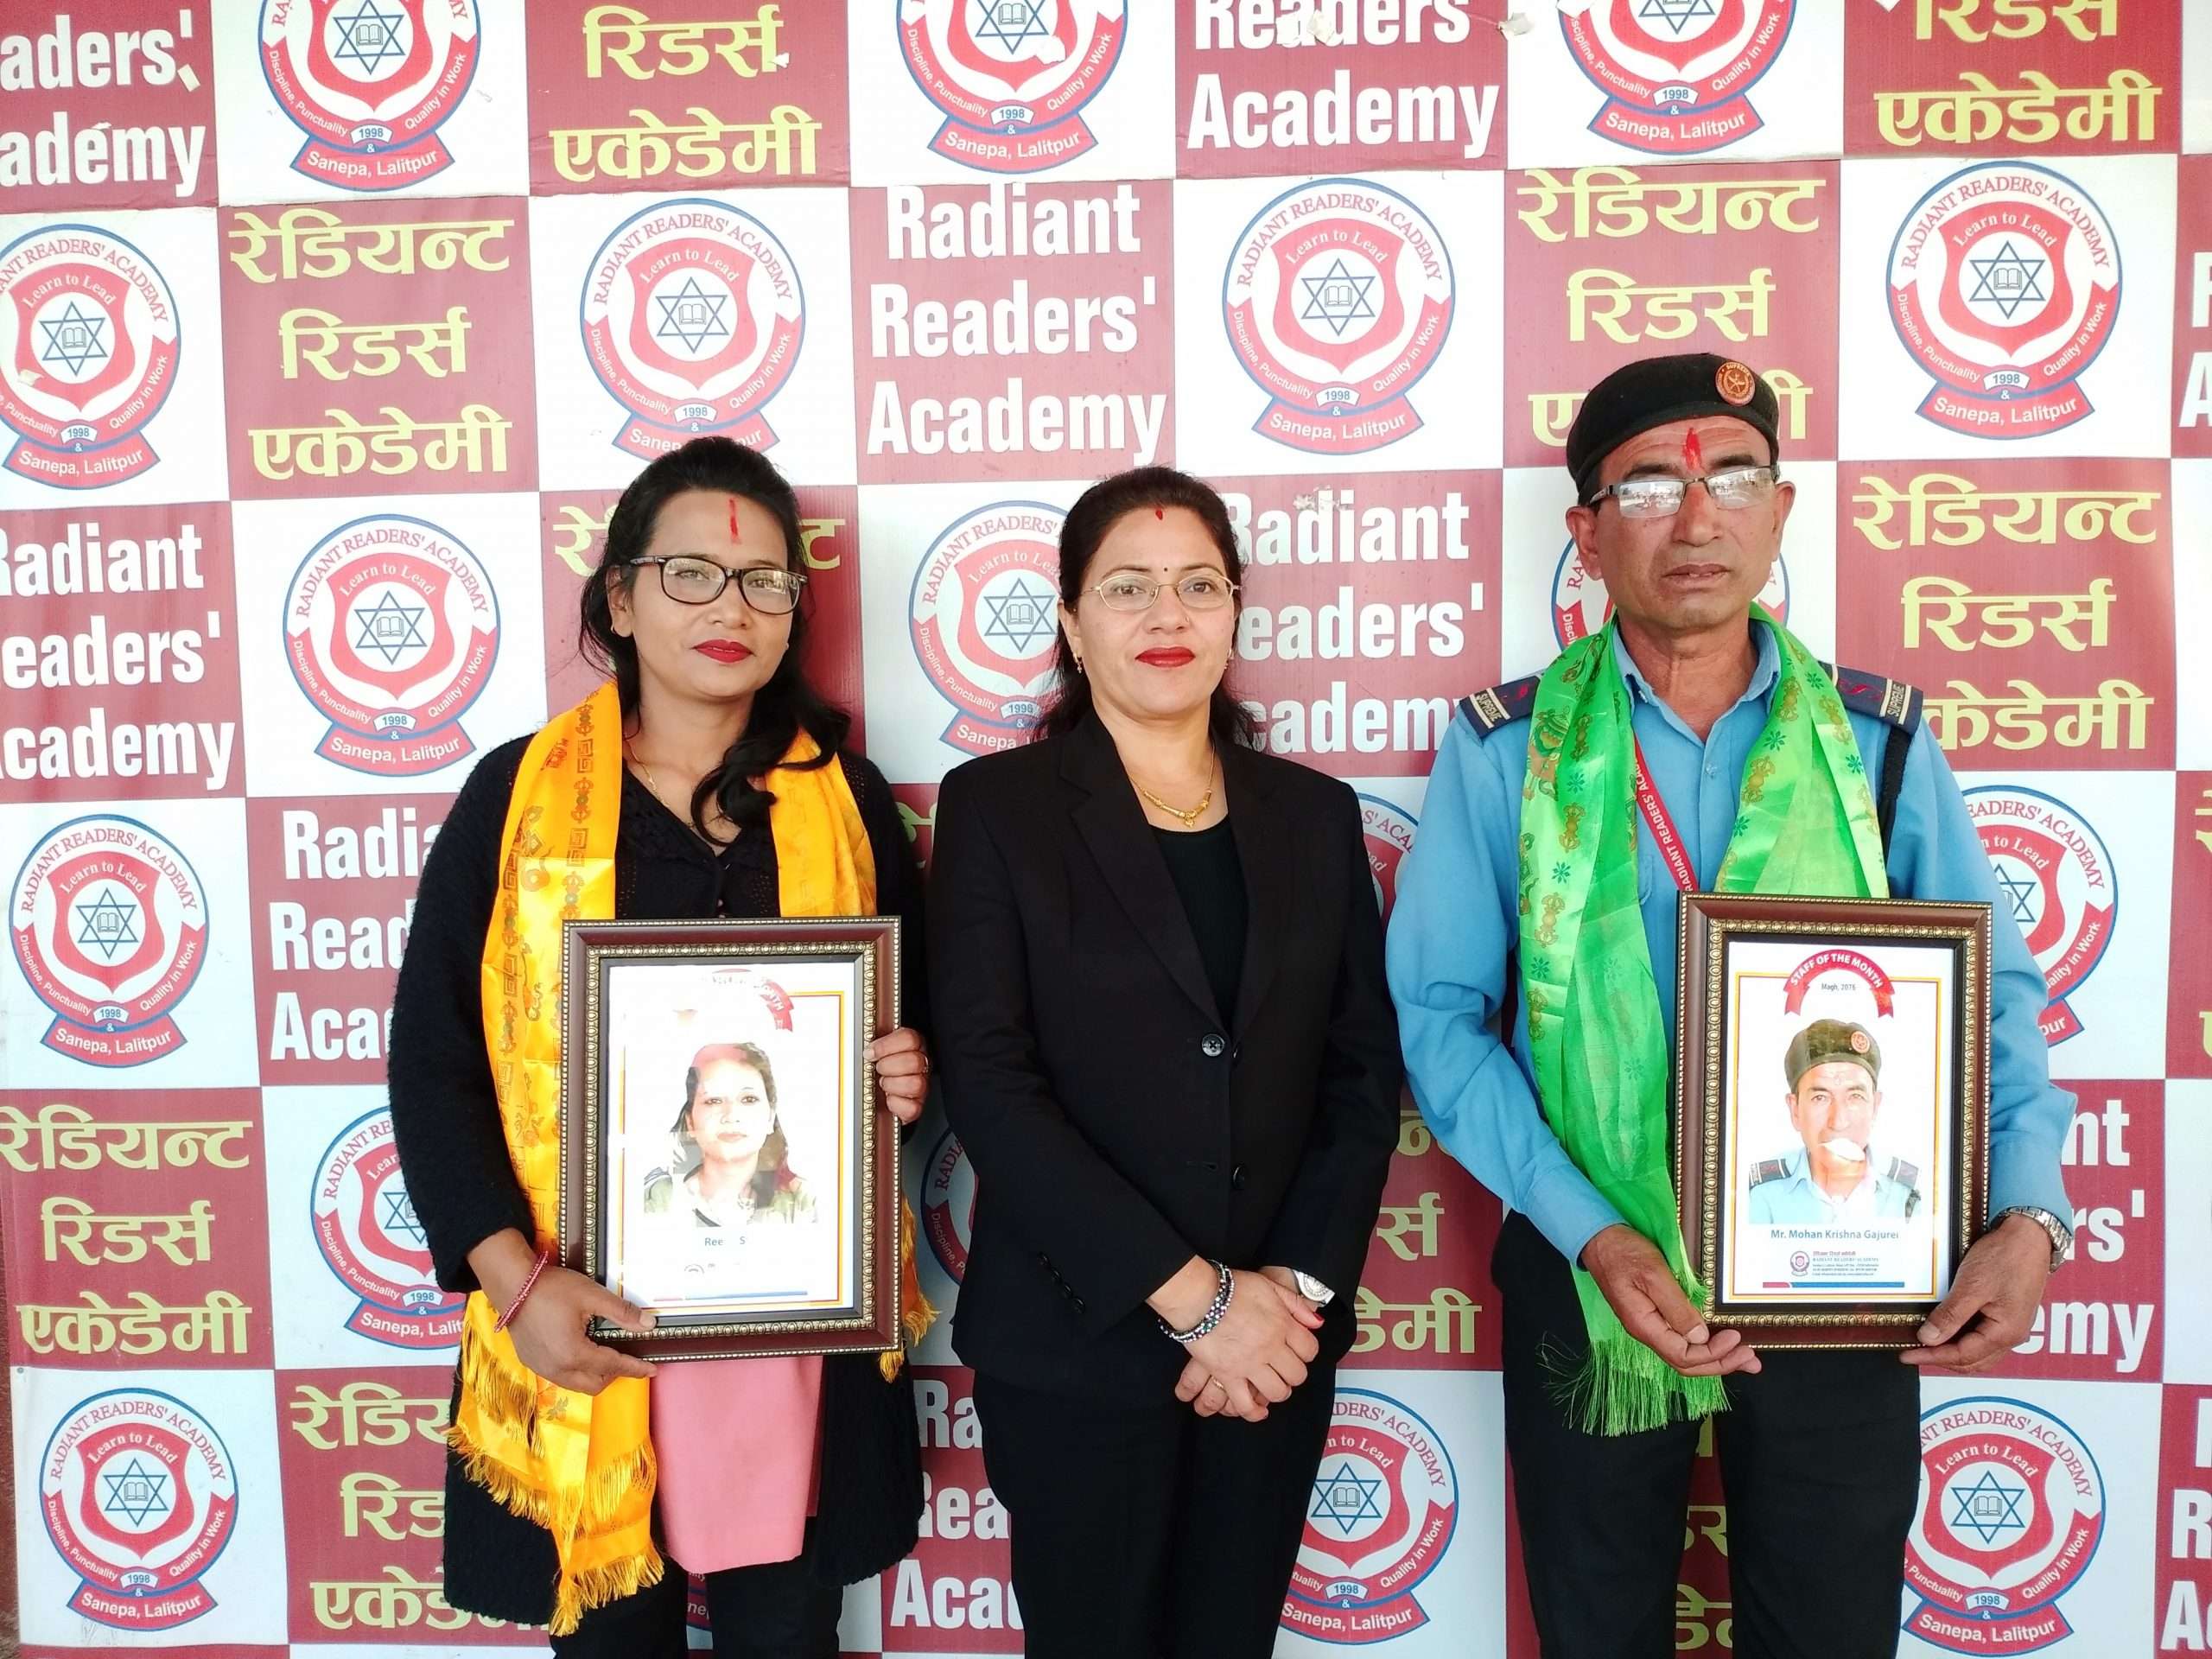 Radiant Readers’ Academy